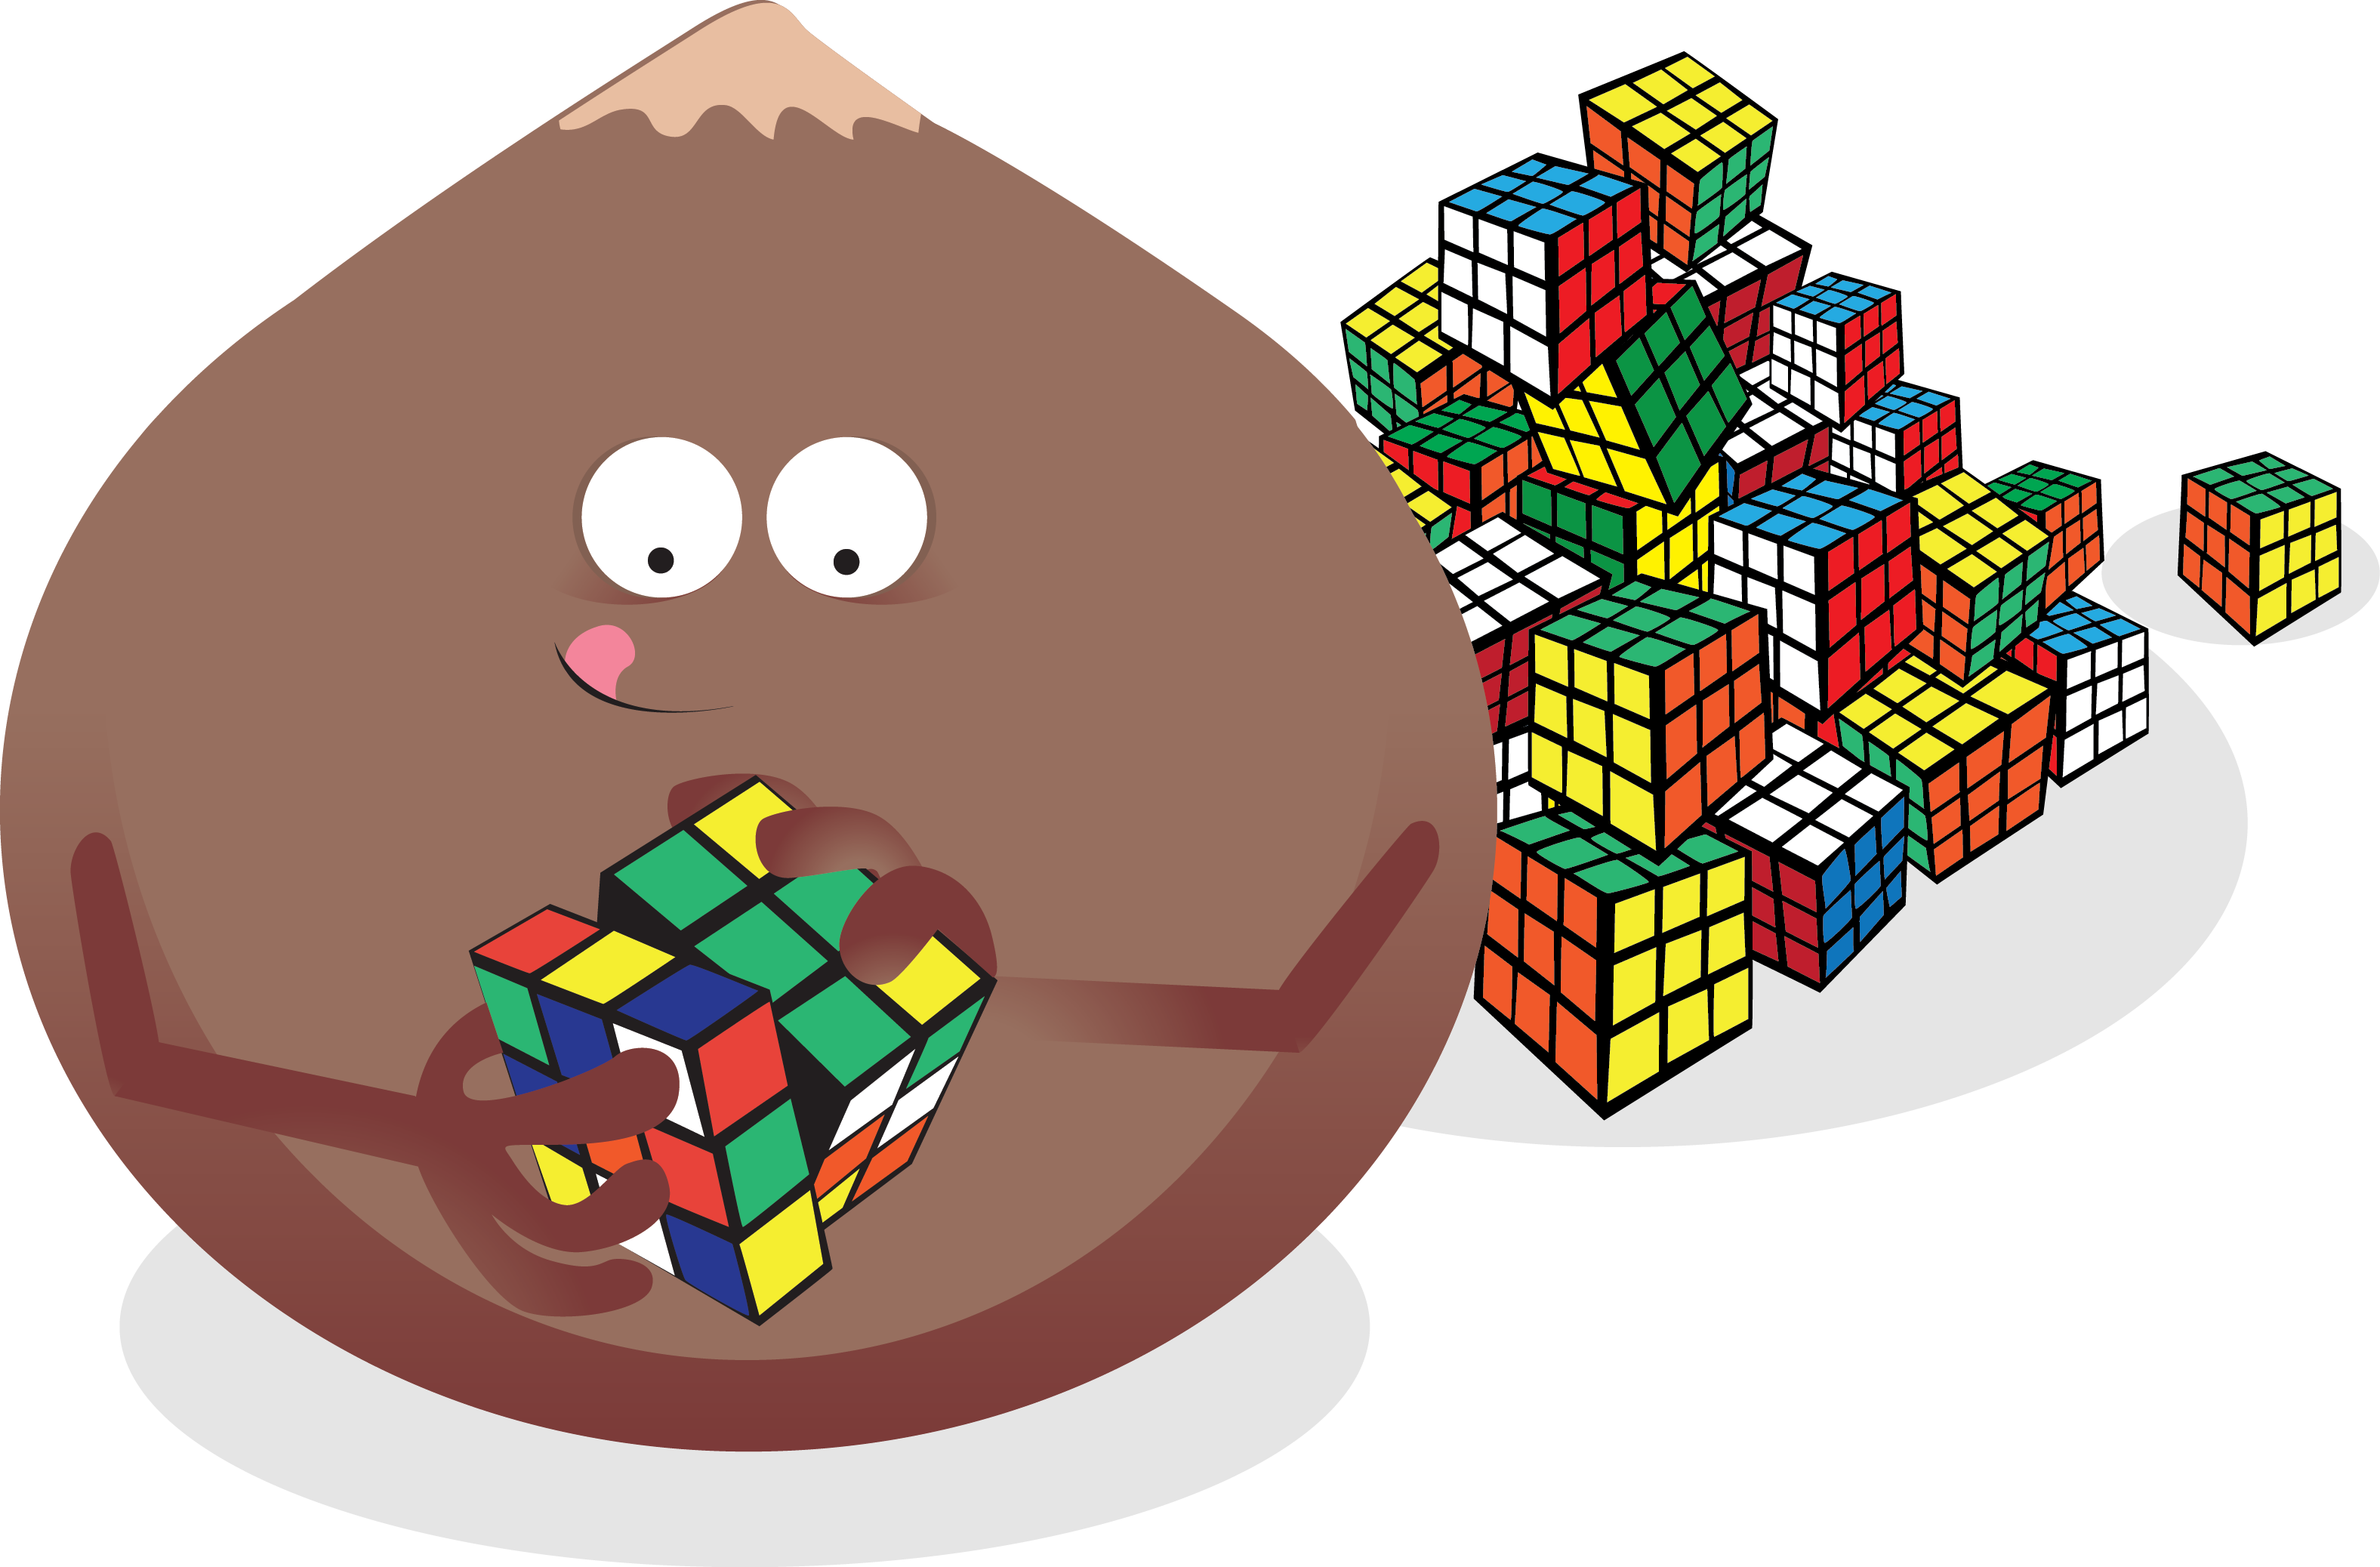 Information Trailblazer: Nut solving multiple rubics cubes. 